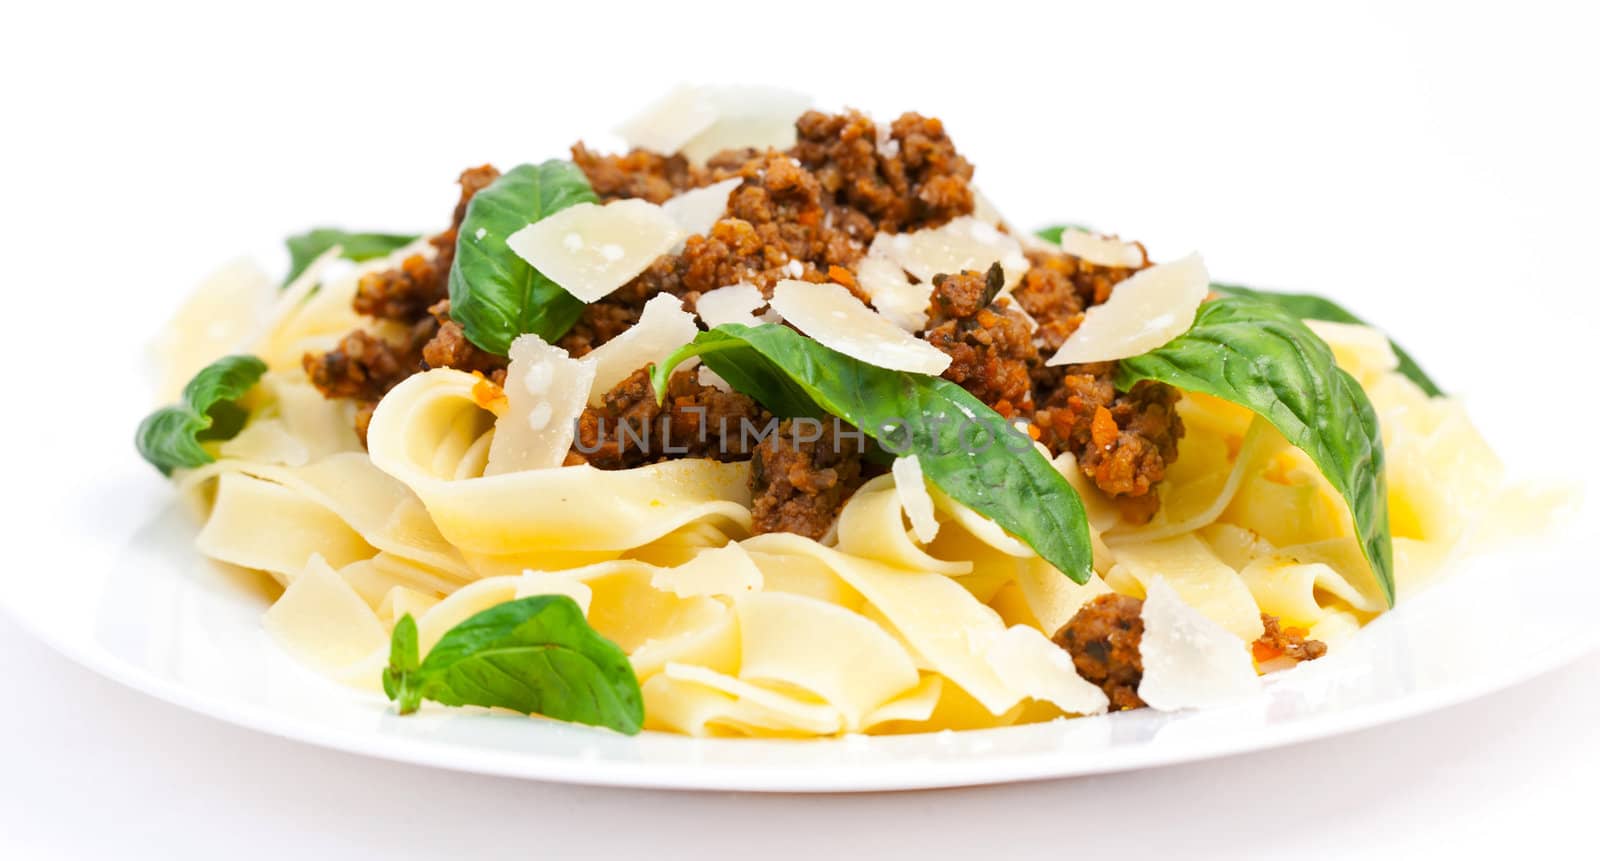 Spaghetti carbonara on white plate with basil